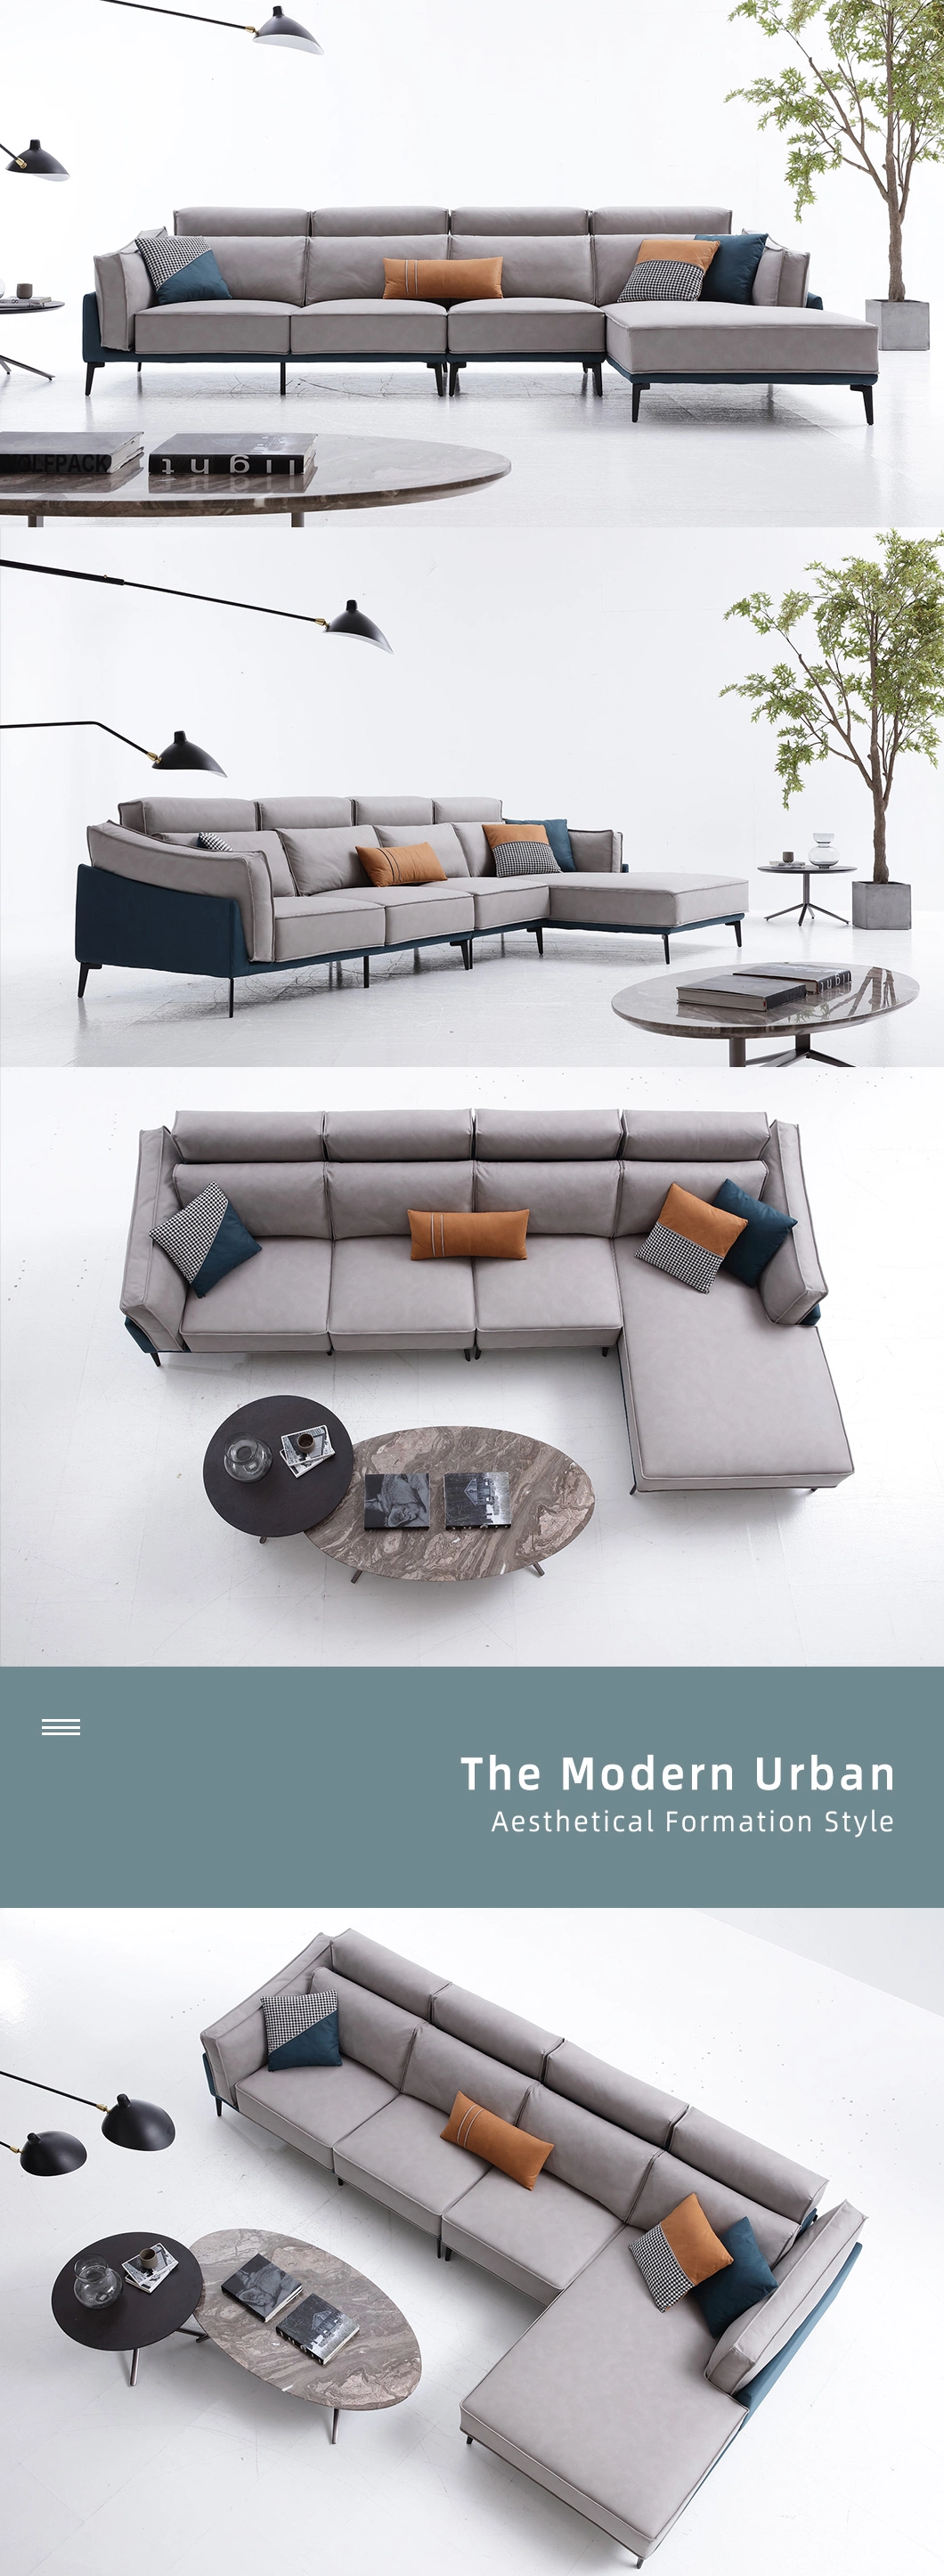 Wholesale Market Fabric Leisure Cloth Living Room Metal Legs Sofa Set for Home Bedroom Furniture